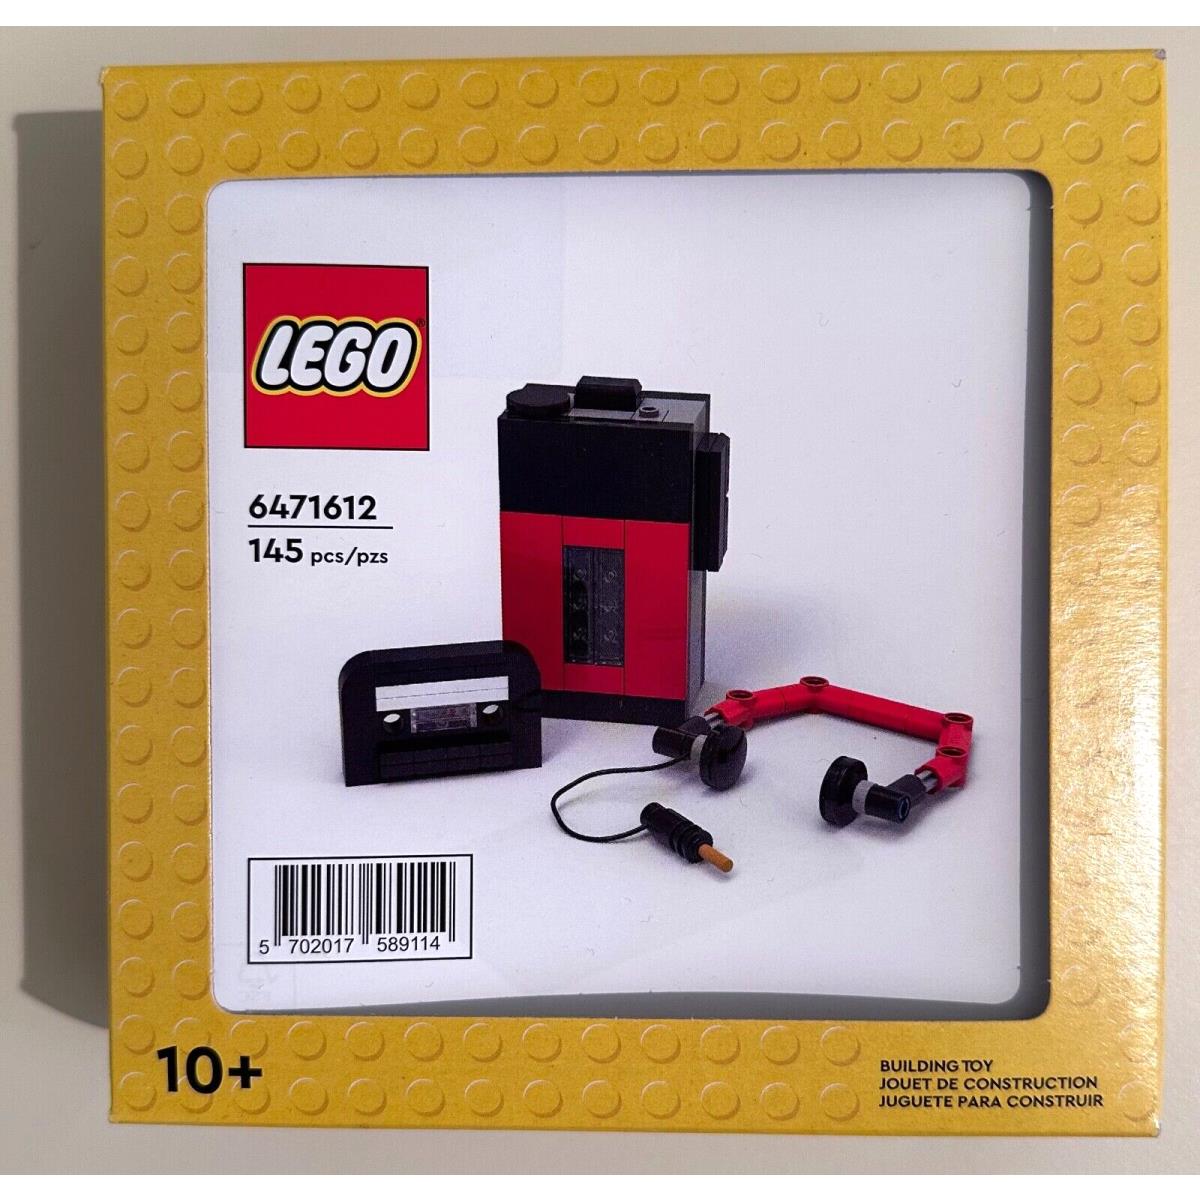 Lego 6471612 Cassette Tape Player Building Kit Toy 145 Pieces 10+